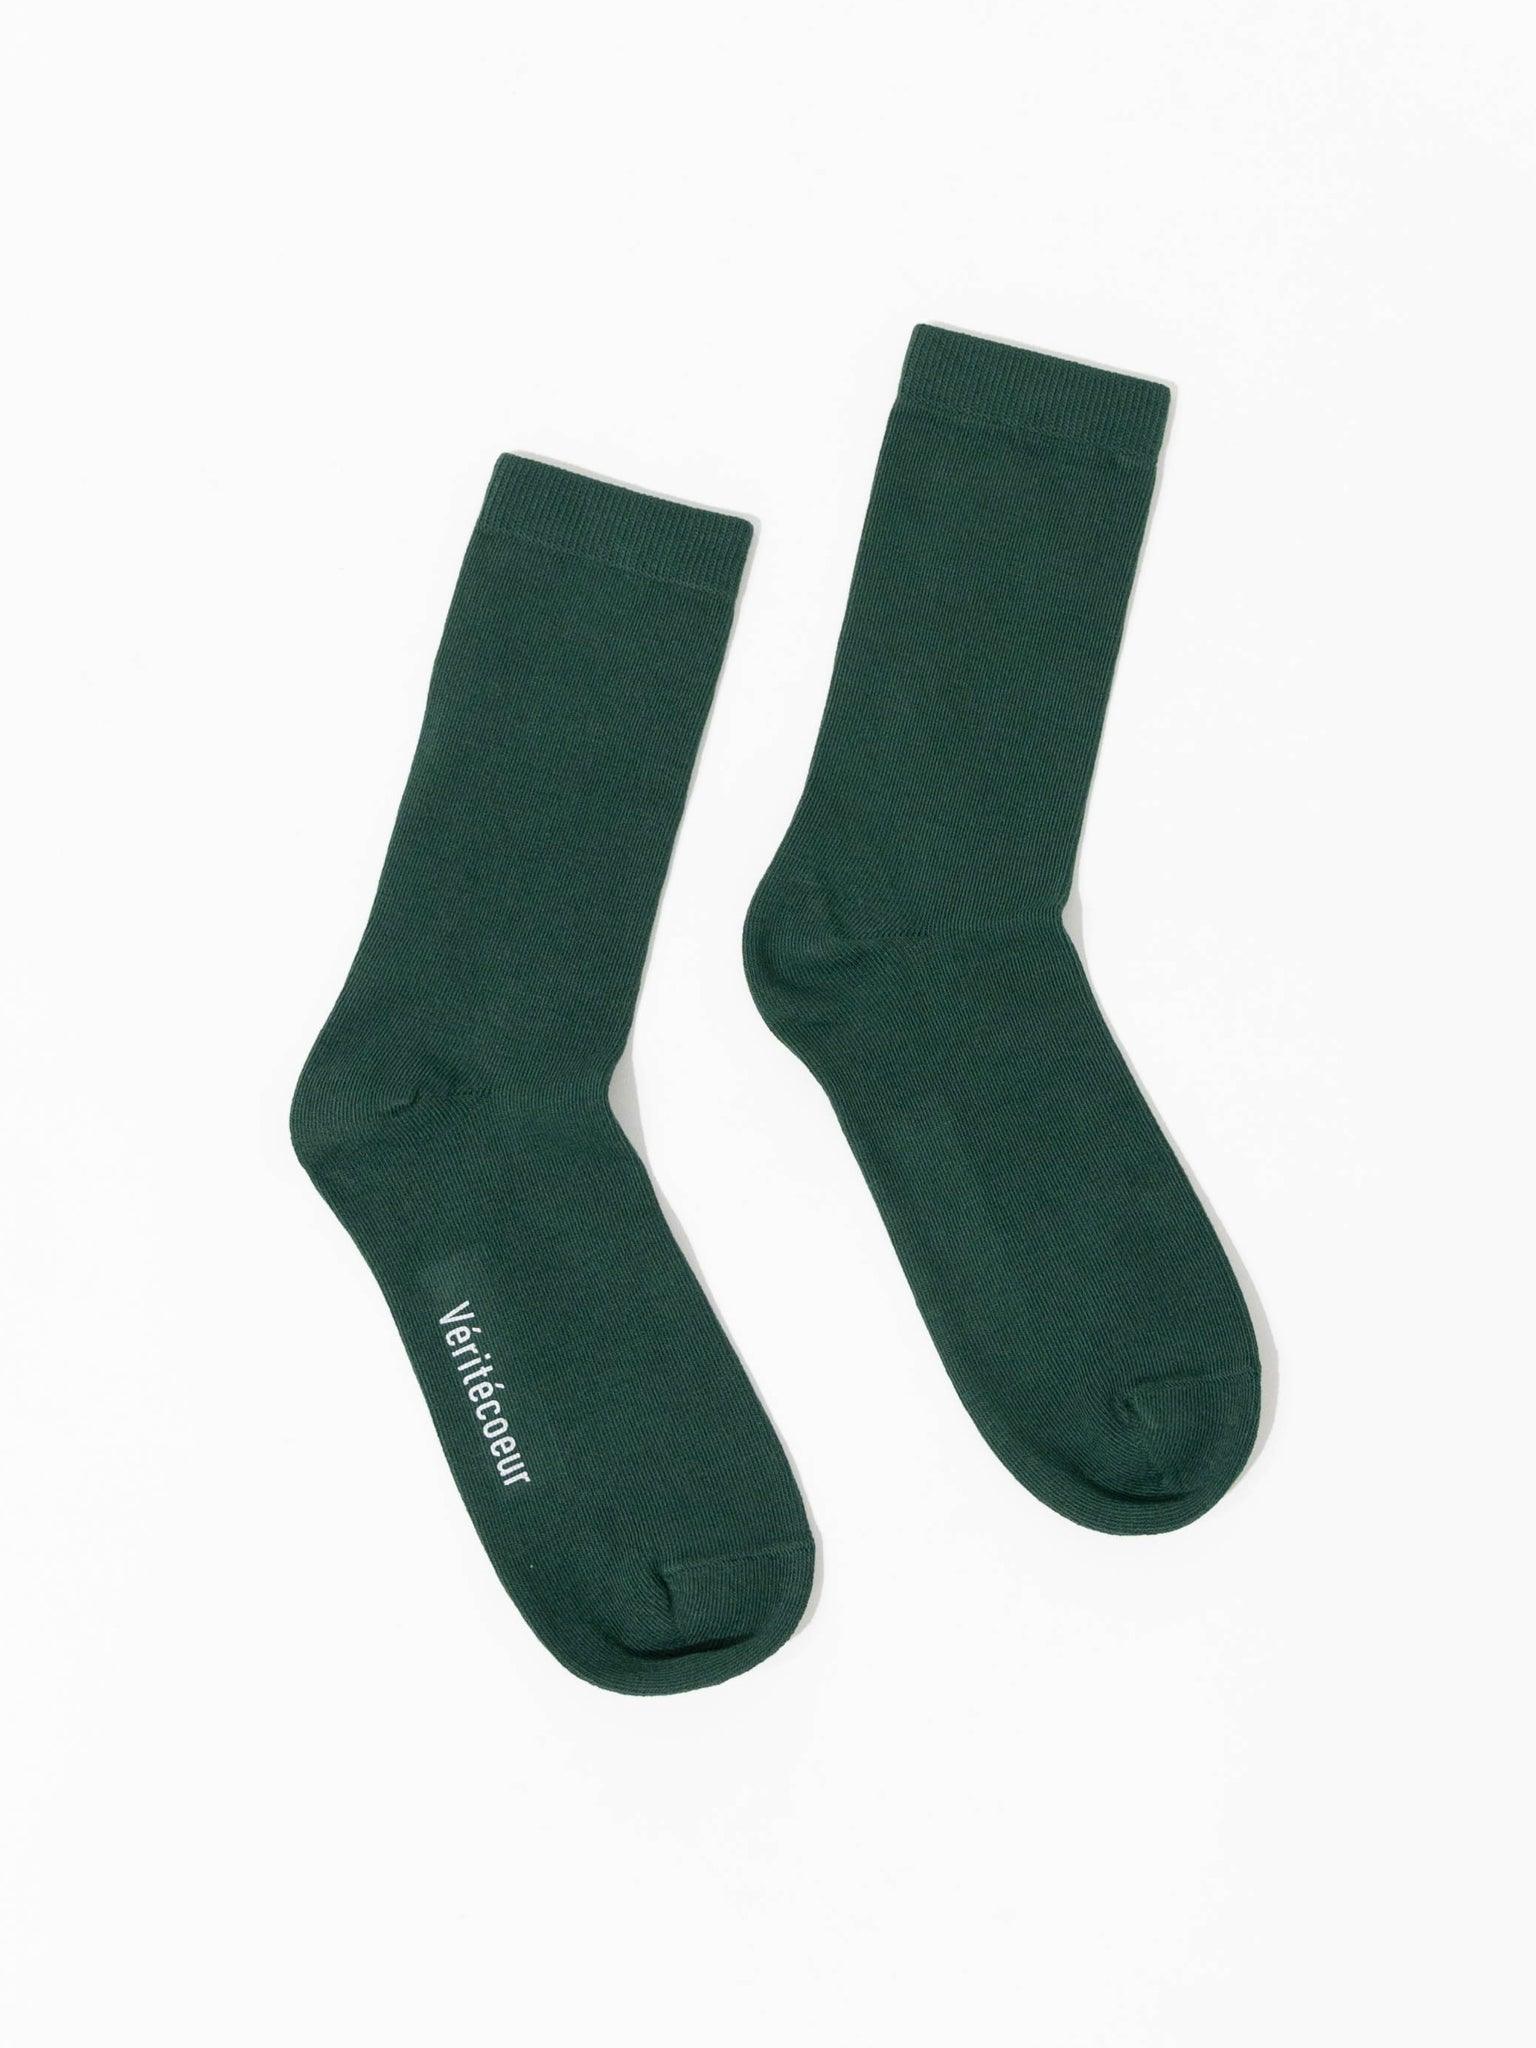 Namu Shop - Veritecoeur Ankle Socks - Green